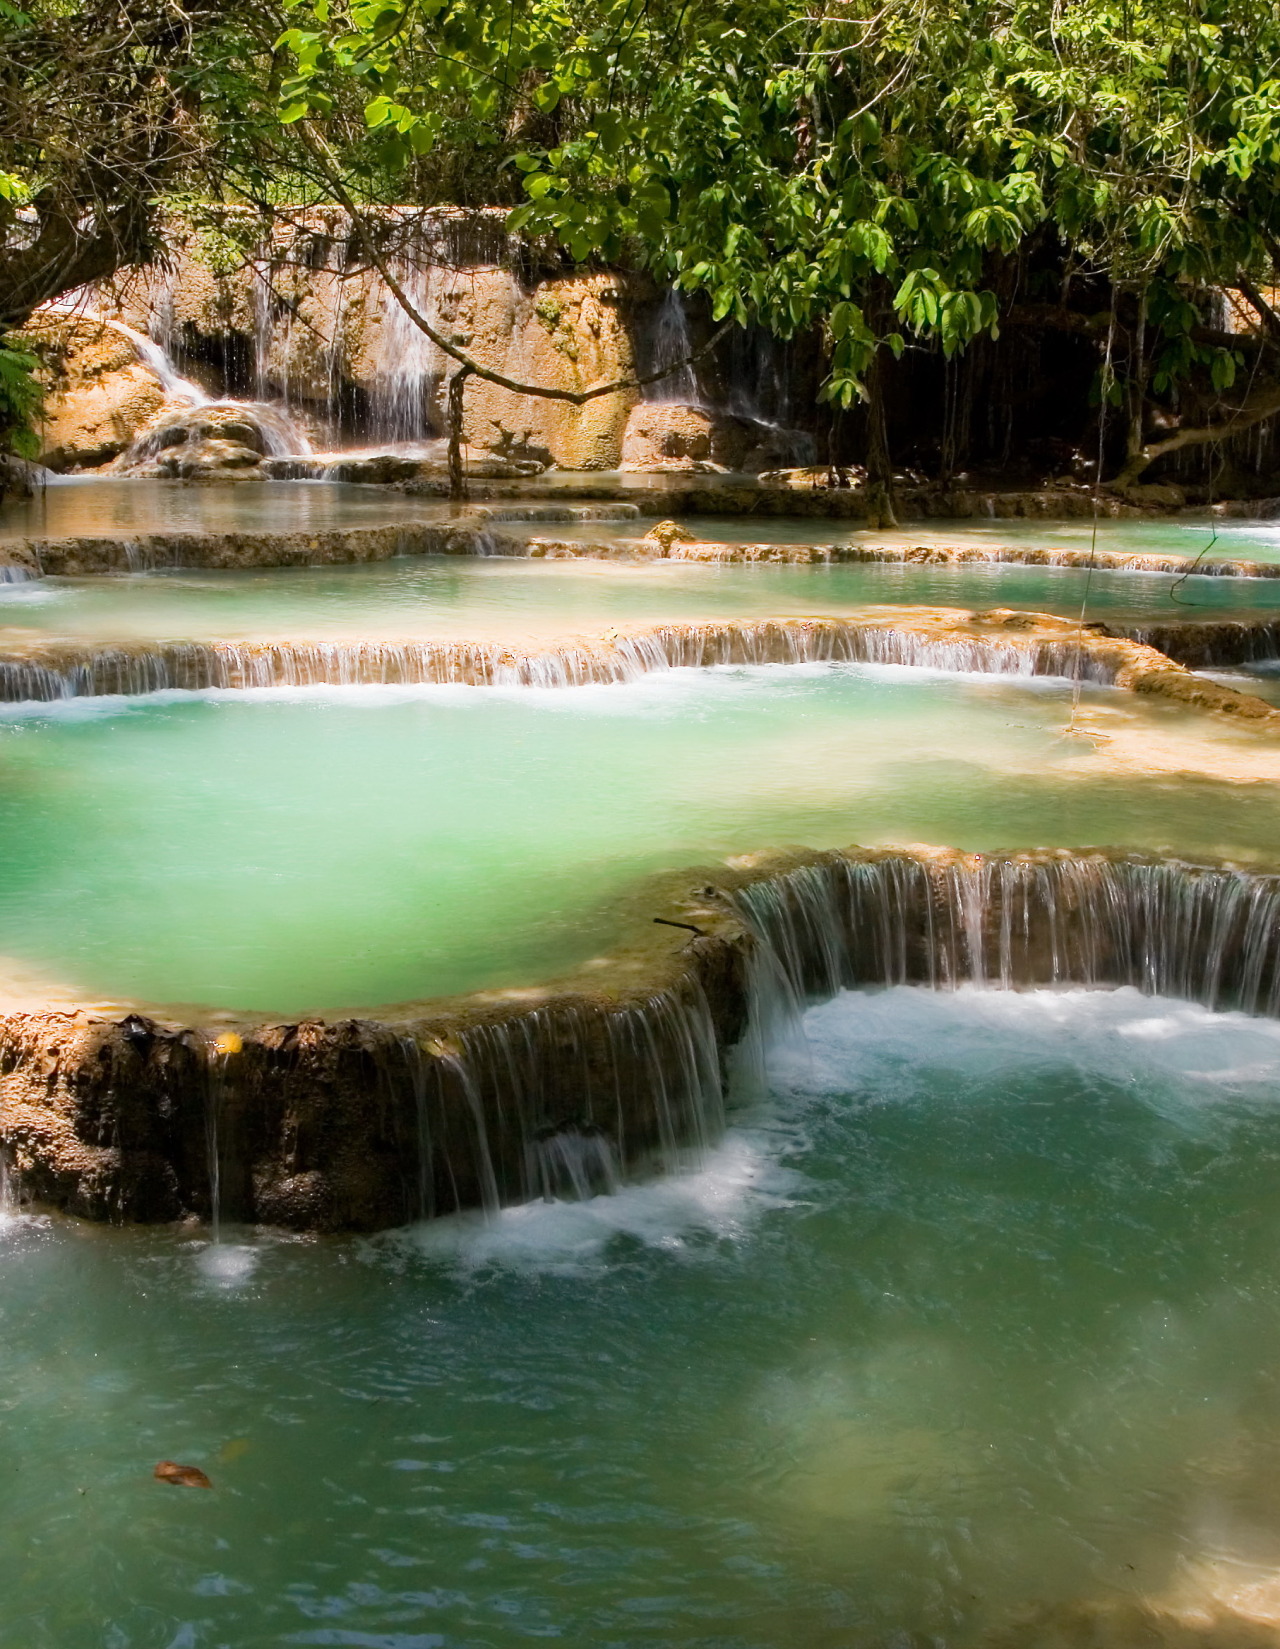 Tat Kuang Si Waterfalls south of Luang Prabang in Laos